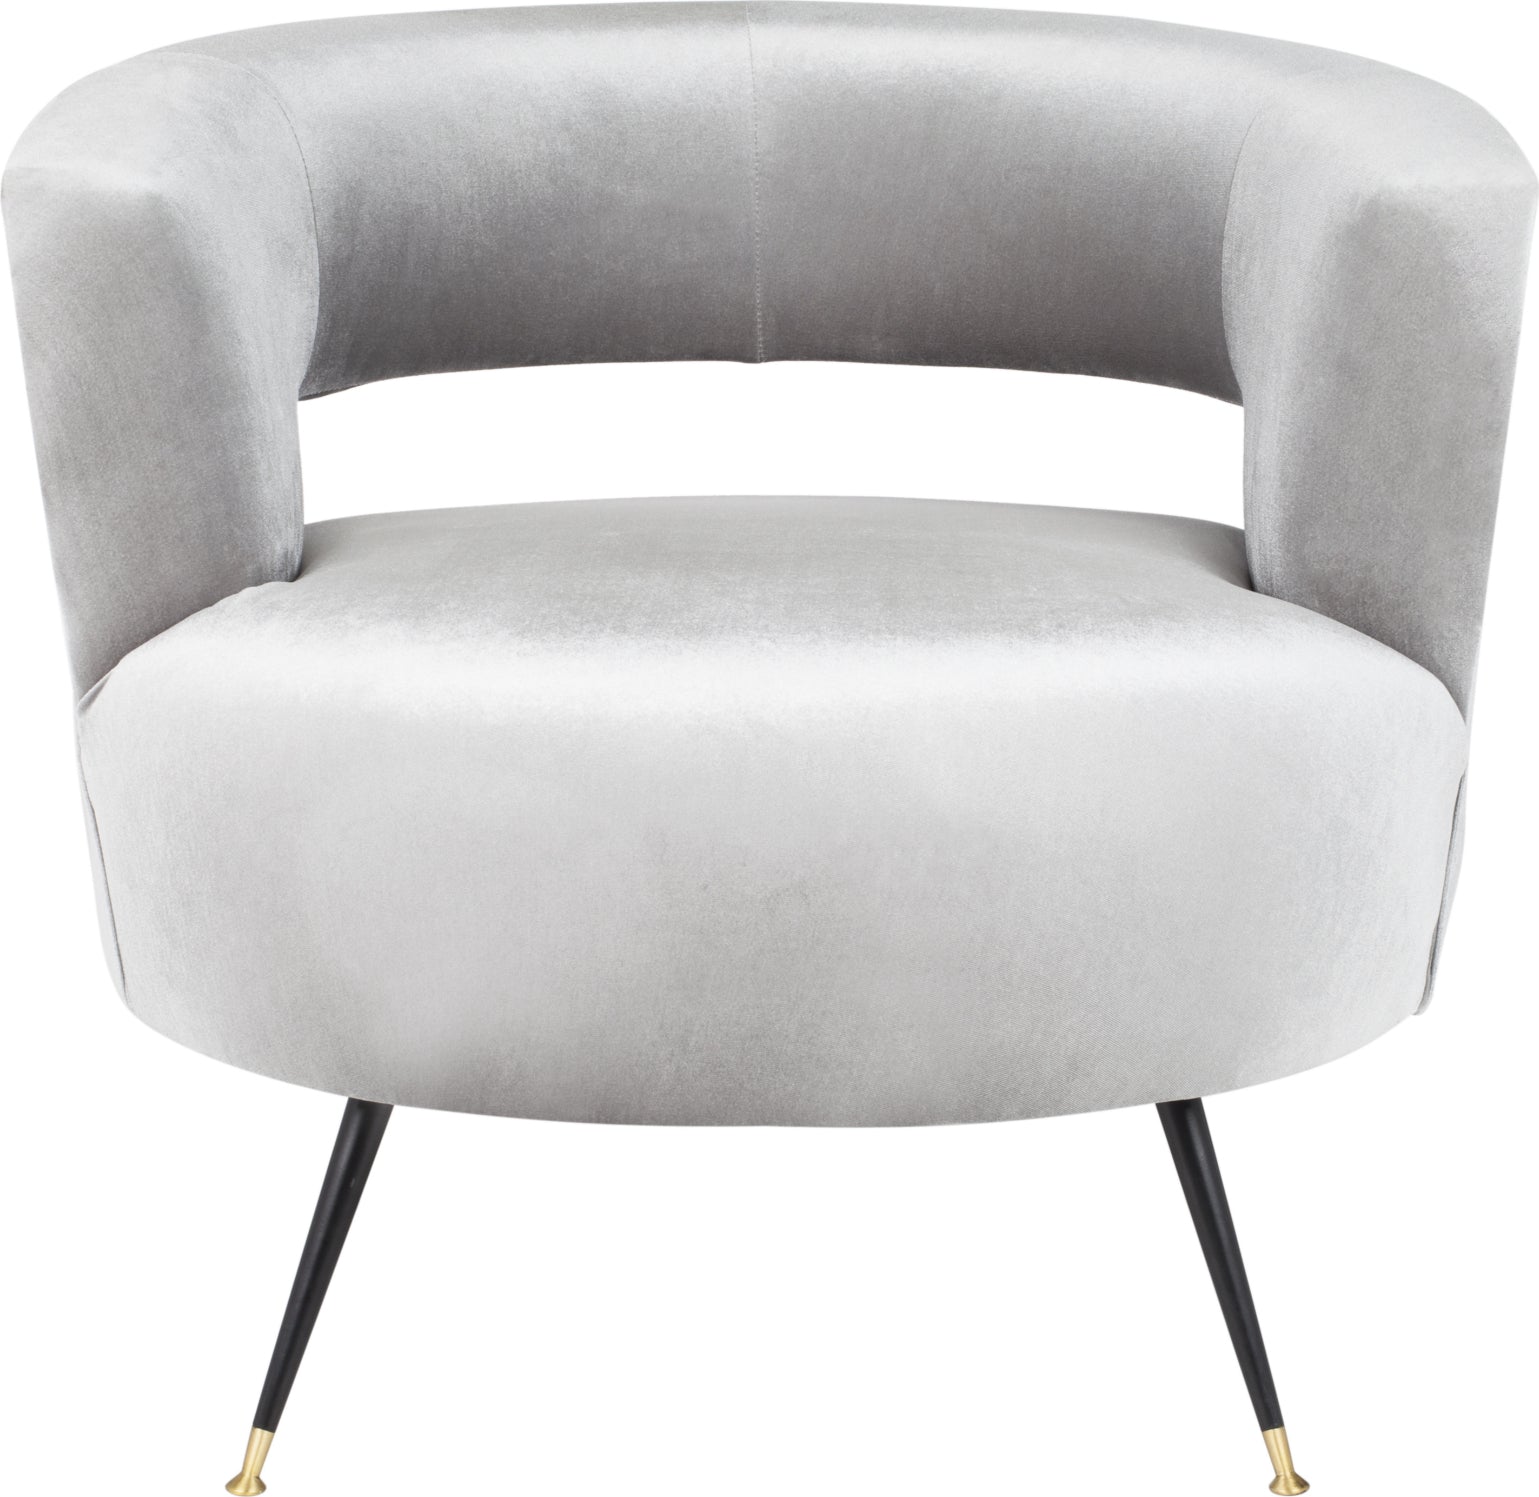 Safavieh Manet Velvet Retro Mid Century Accent Chair Light Grey Furniture main image